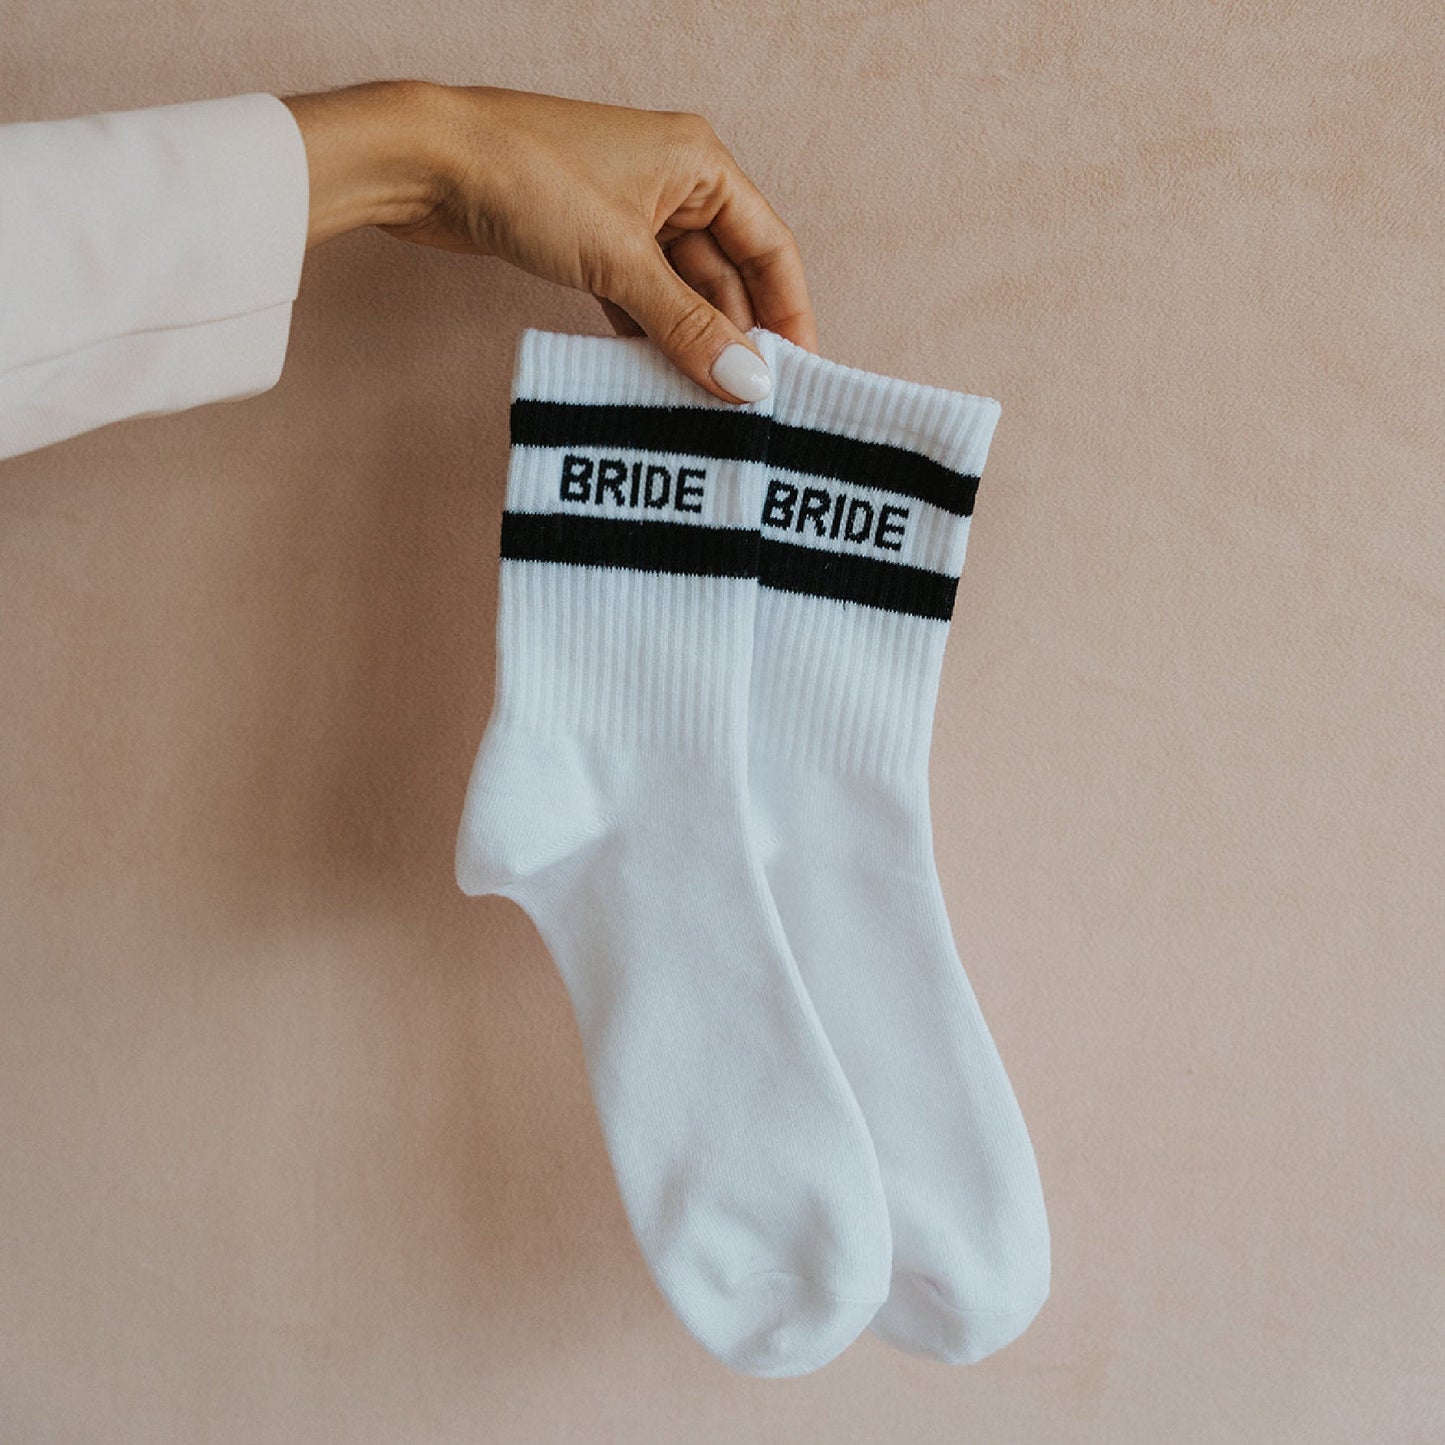 bride-and-team-bride-socks-set